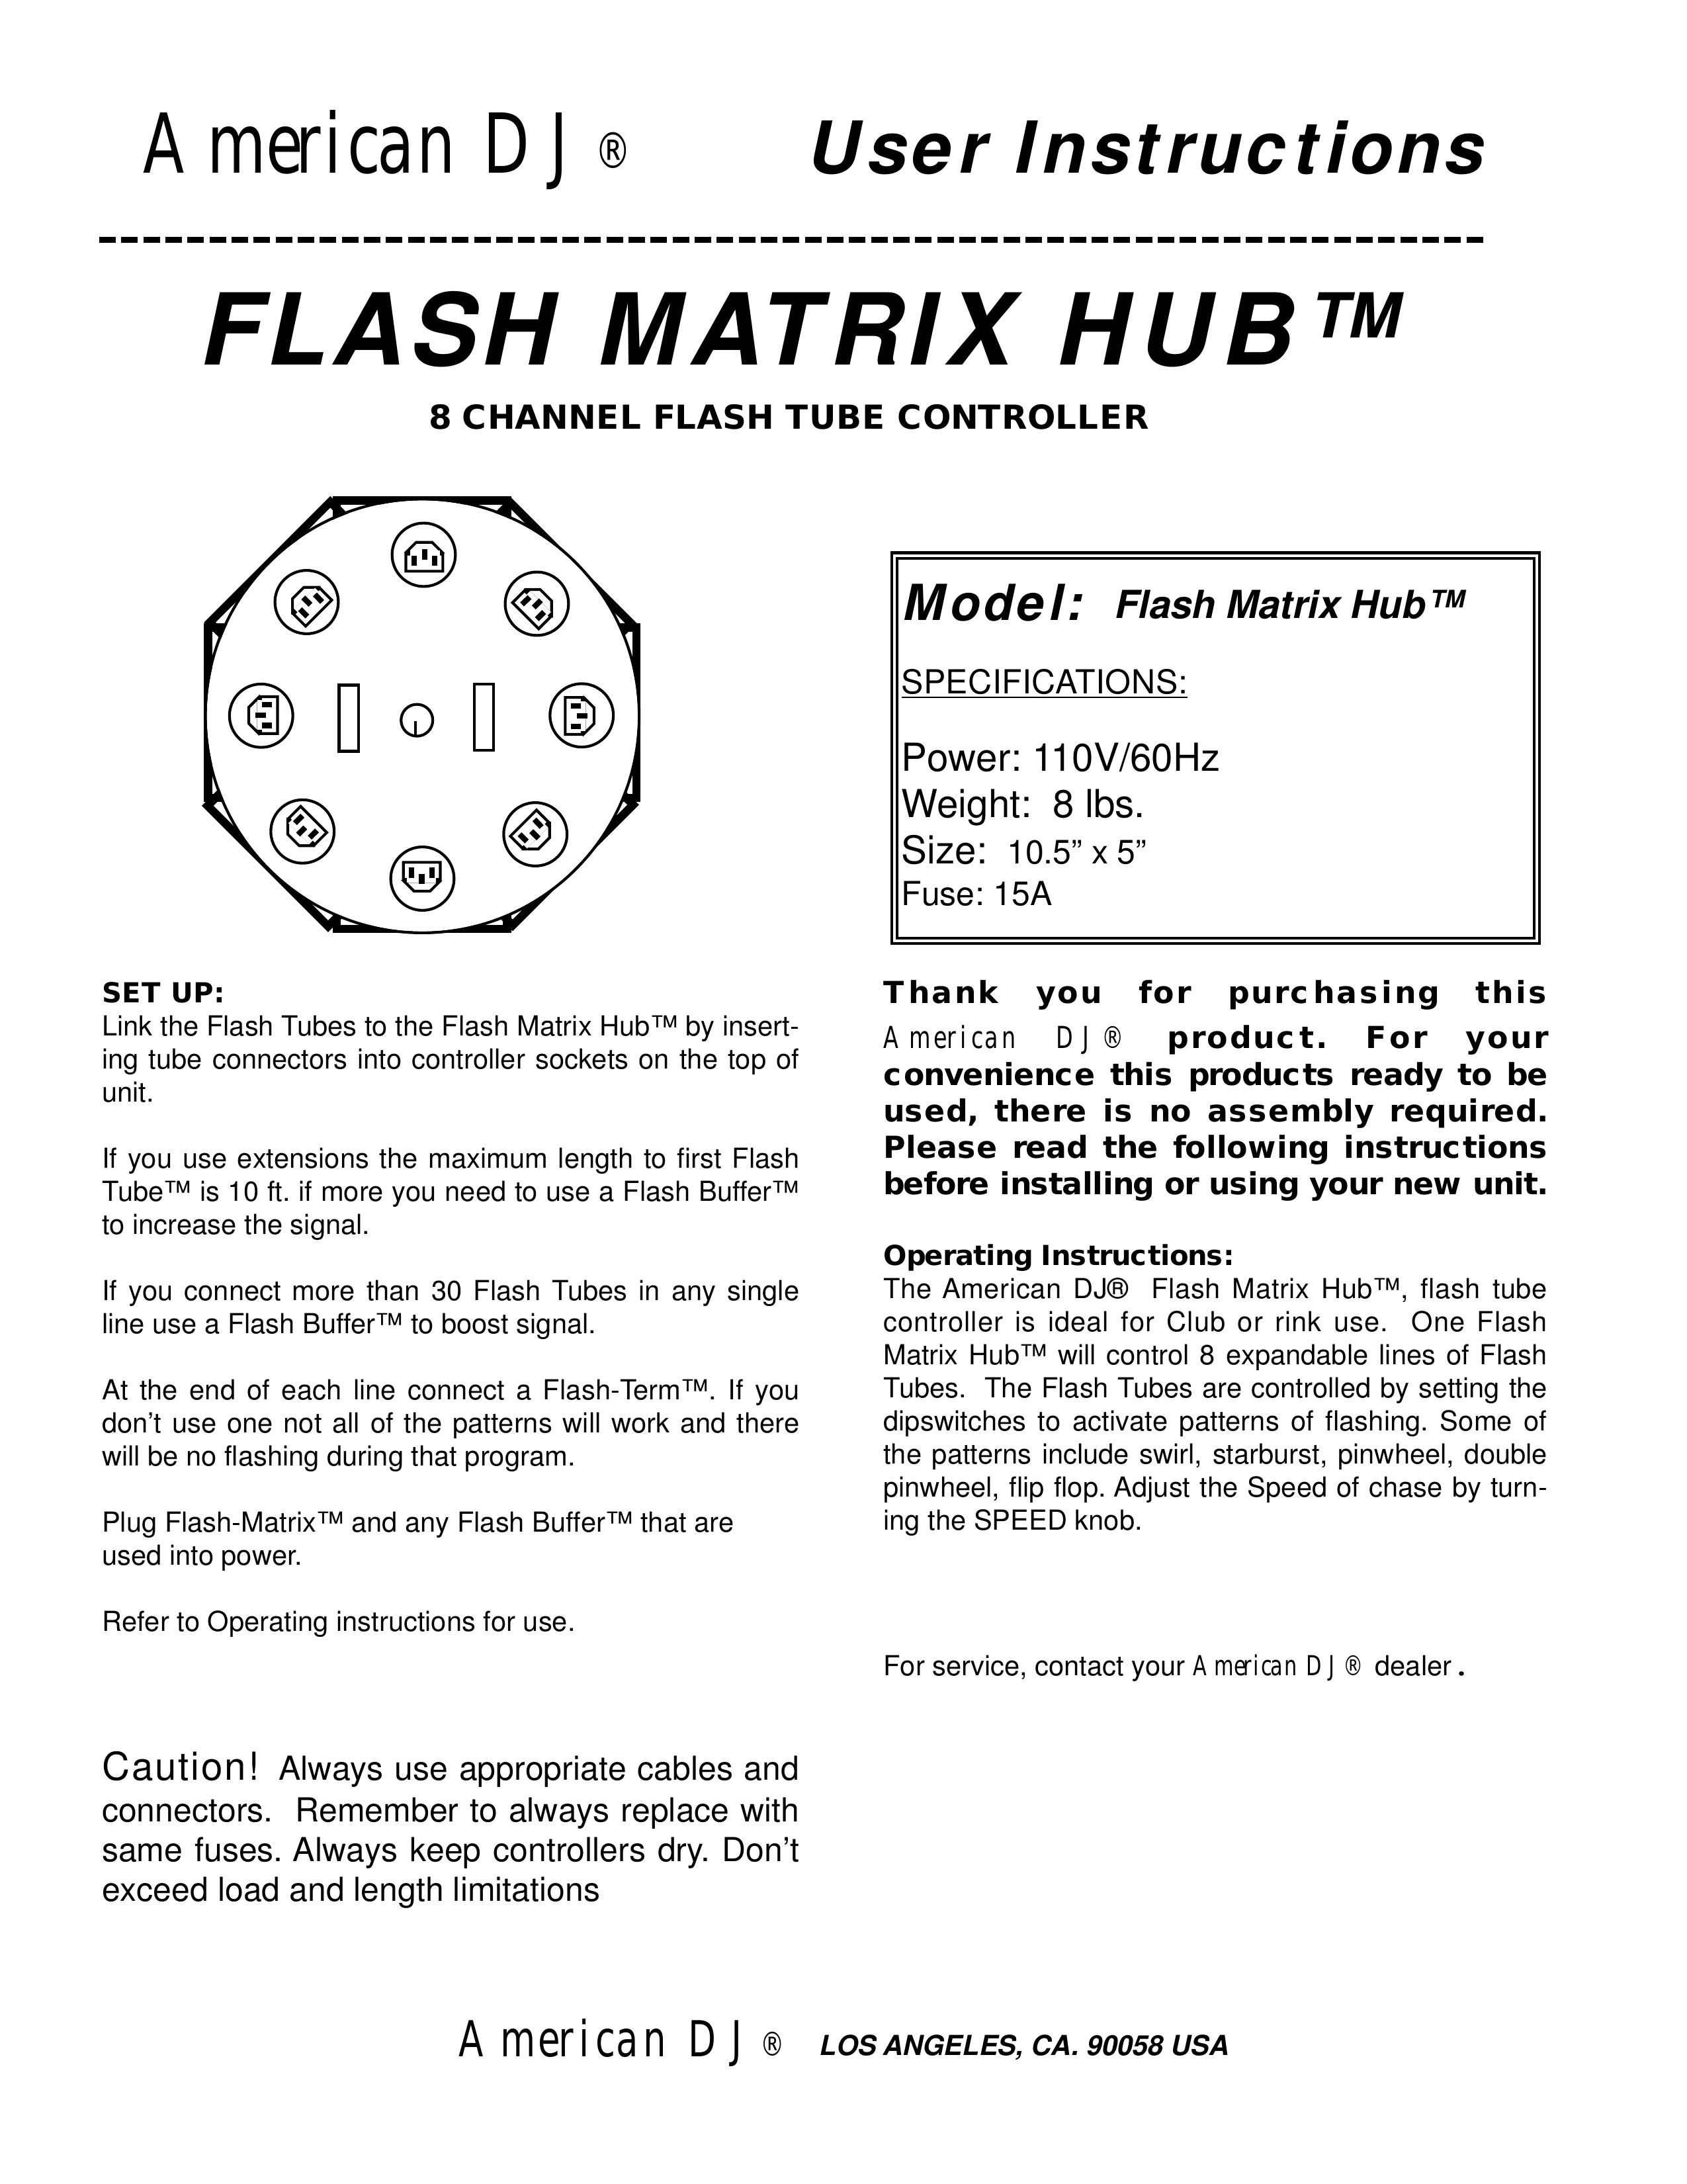 American DJ Flash Matrix Hub DJ Equipment User Manual